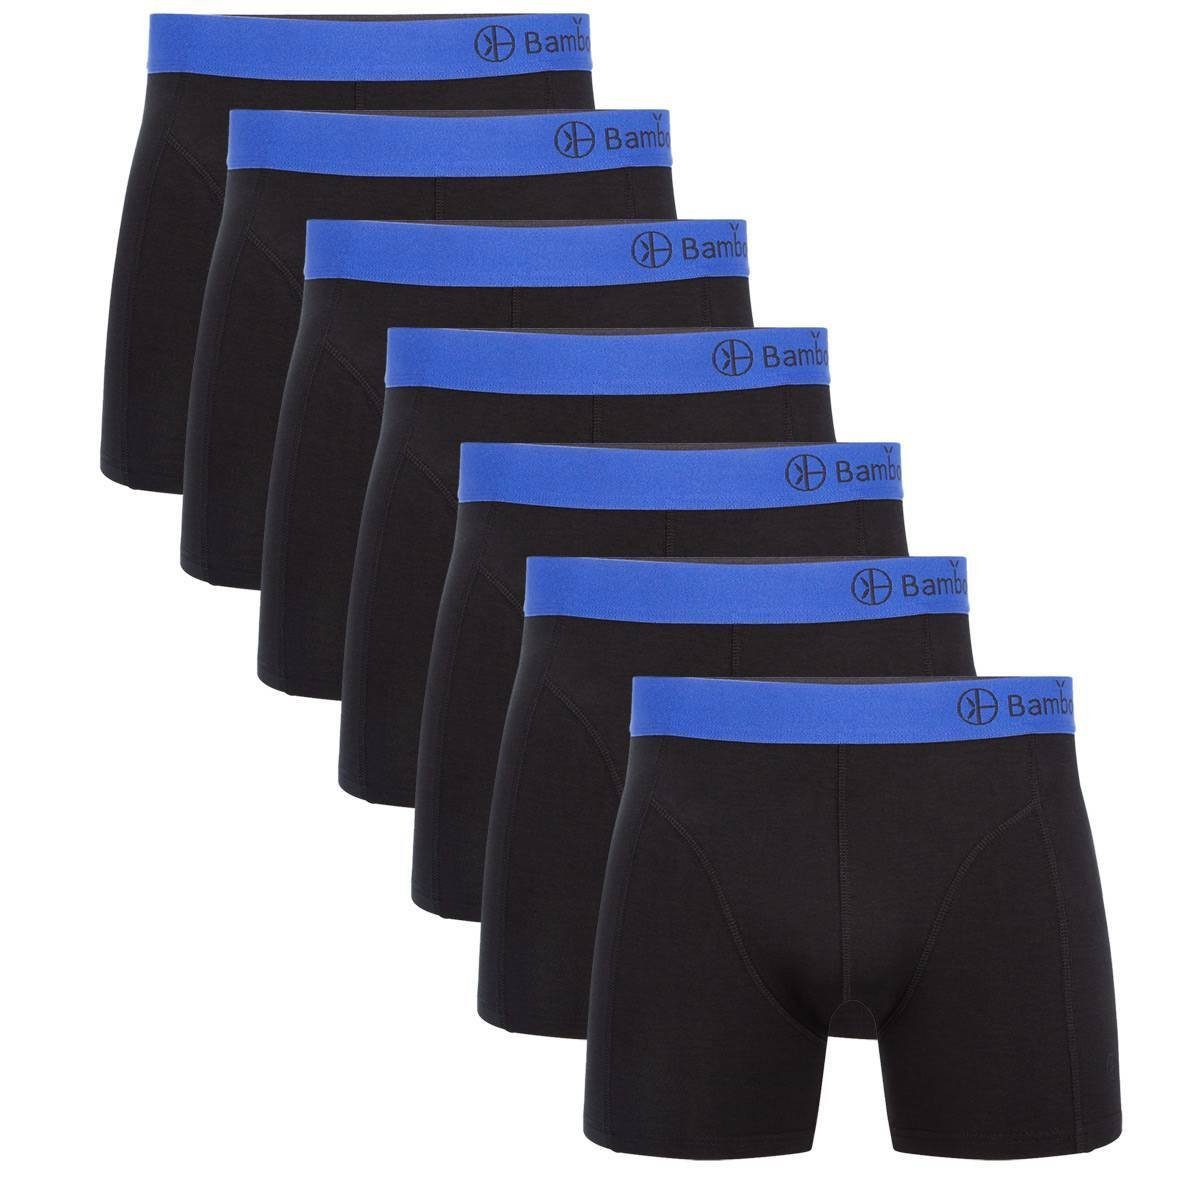 Bamboo basics Boxer Herren Boxer Shorts, 7er Pack - LEVI7P Schwarz/Blau